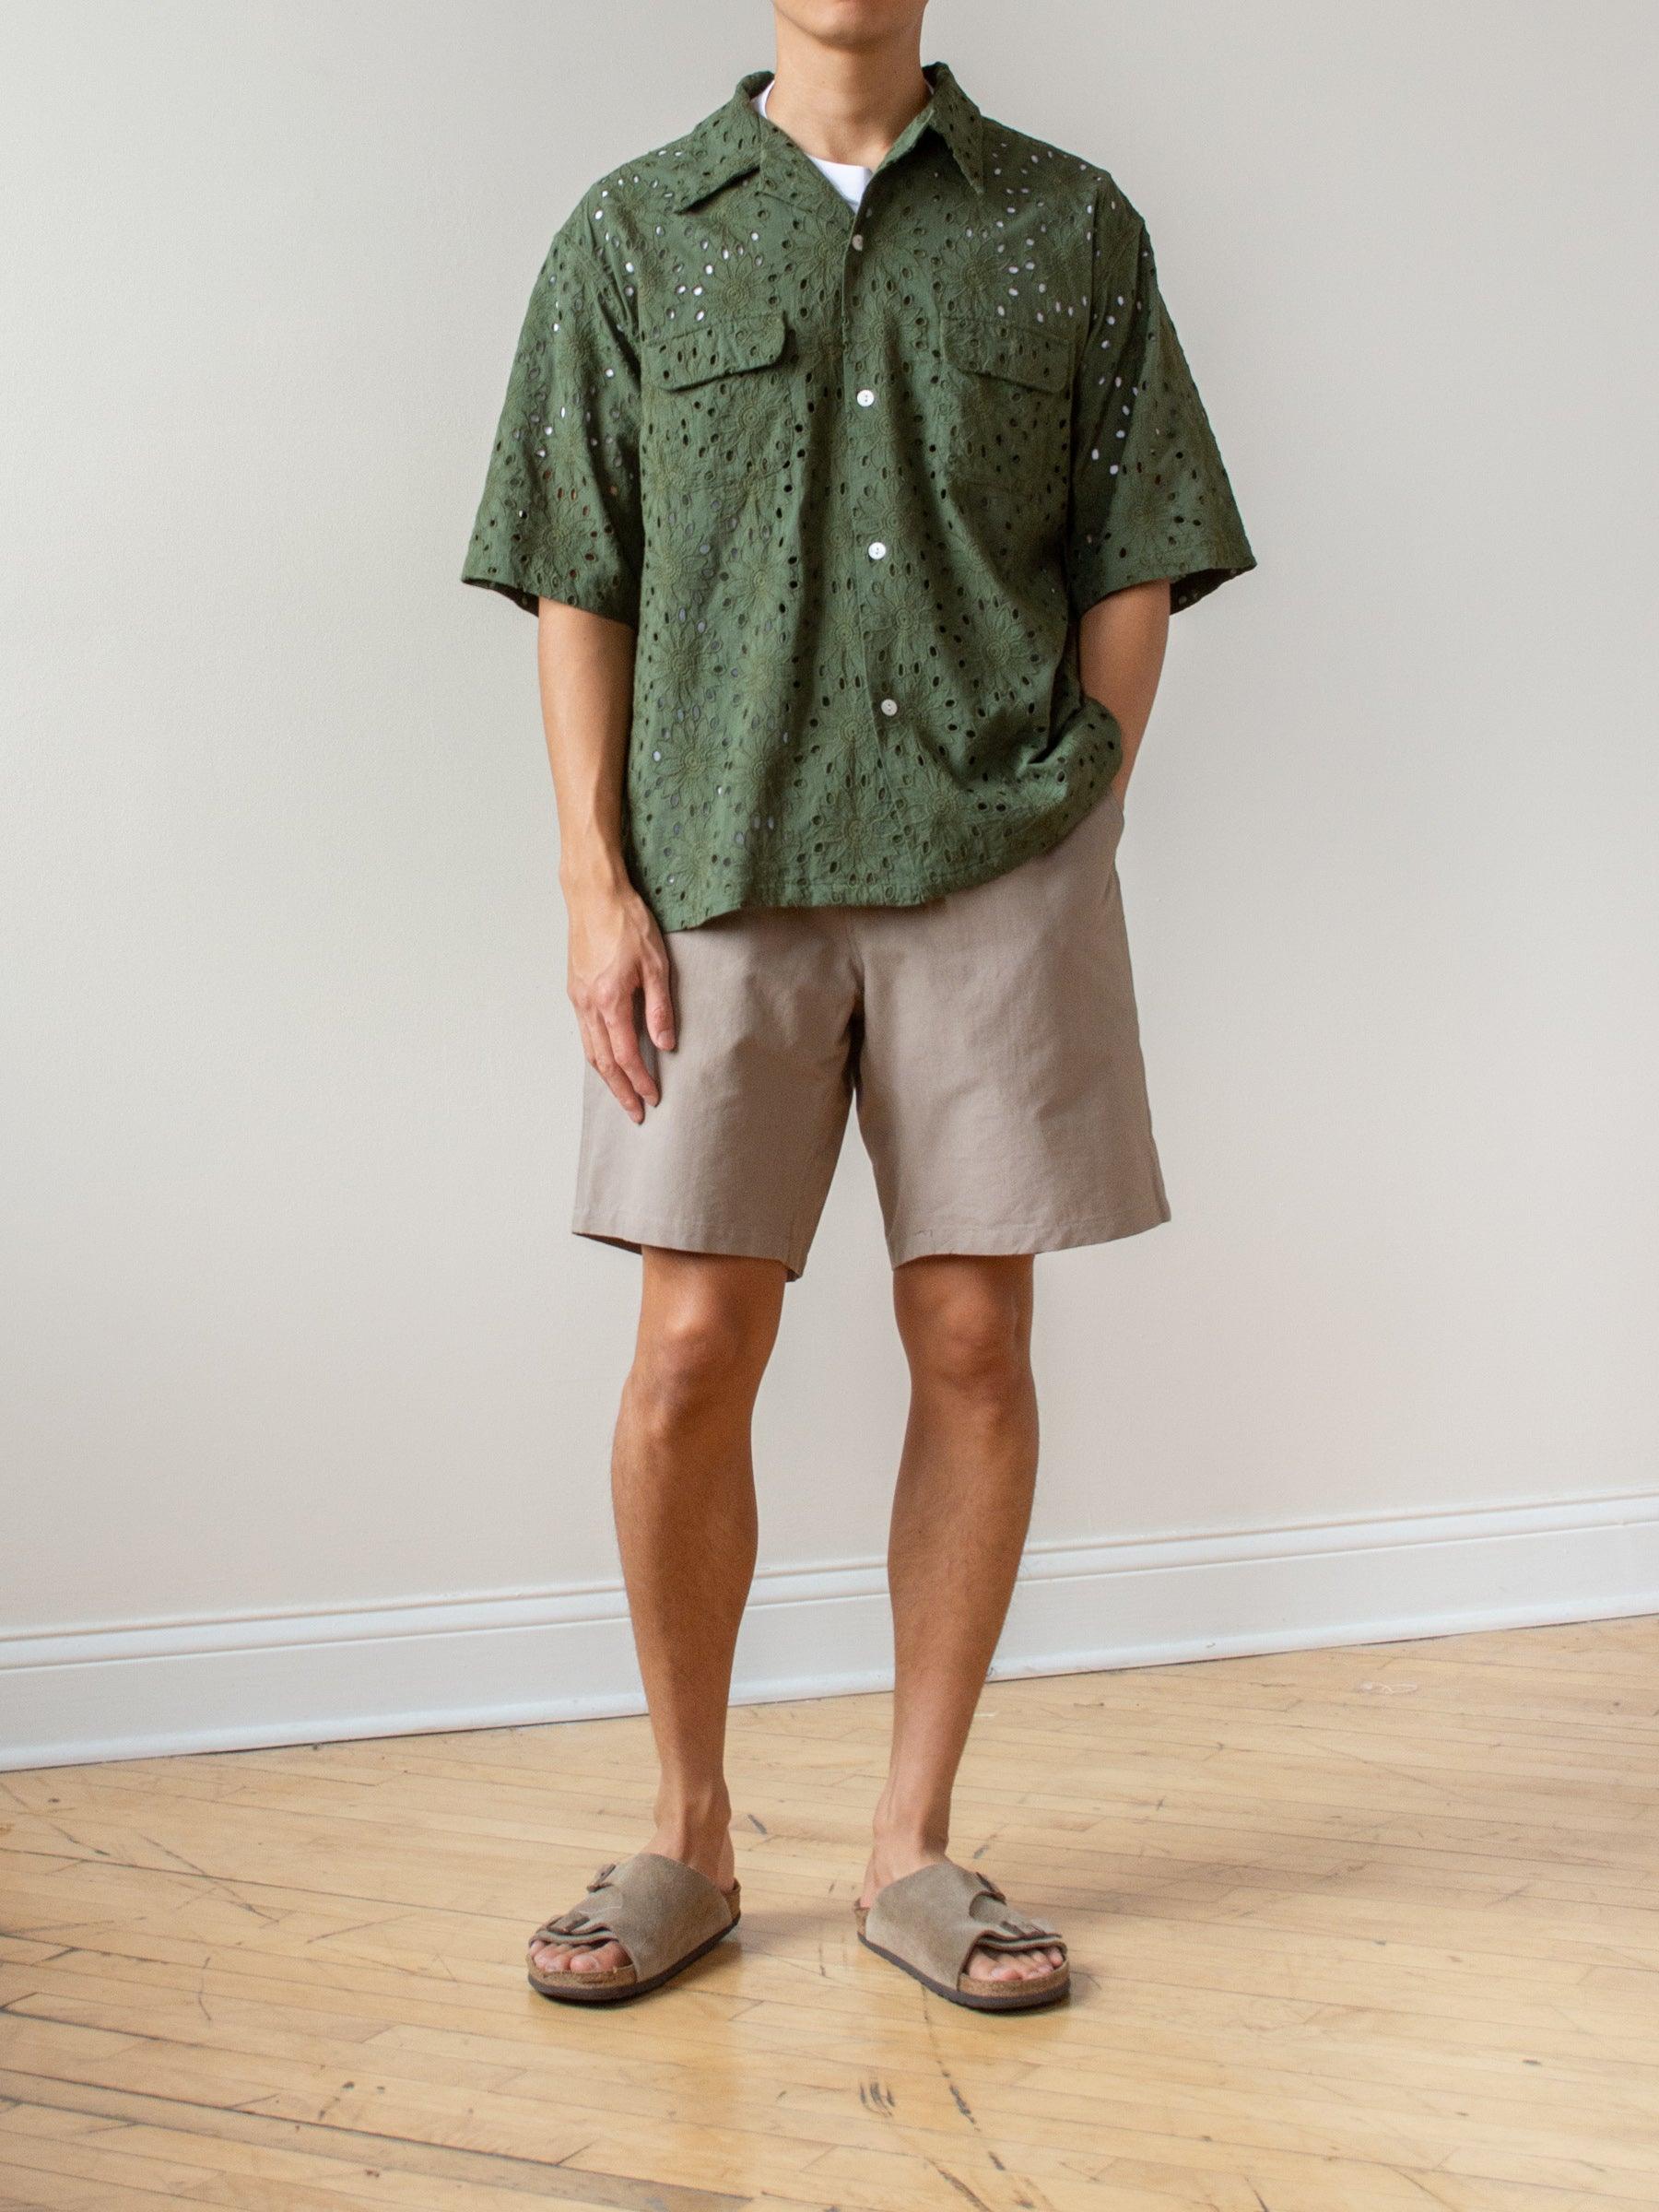 ASOS DESIGN slim fit lace shirt in green